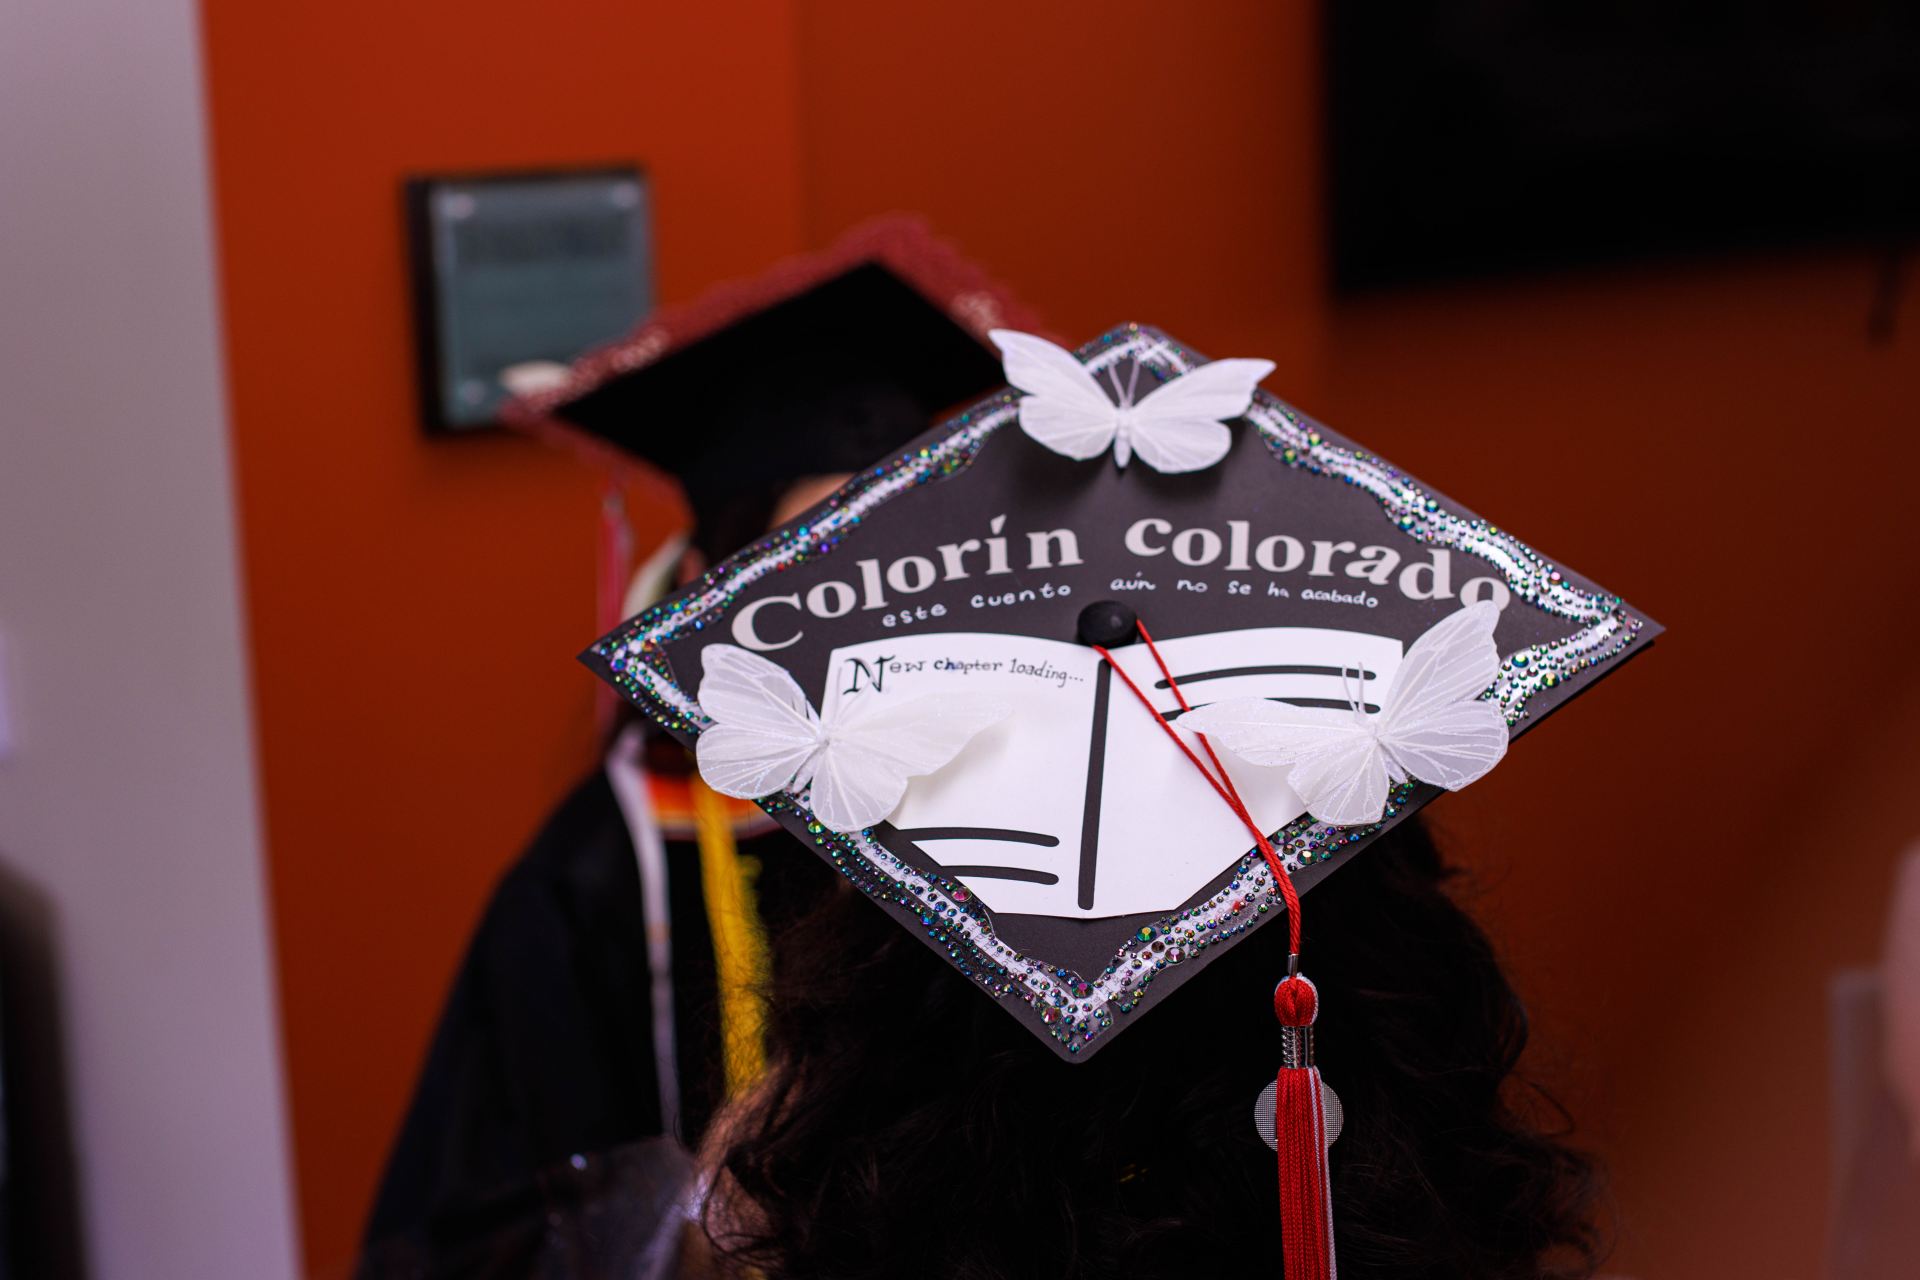 A graduation cap that says "Colorin Colorado" in Spanish.